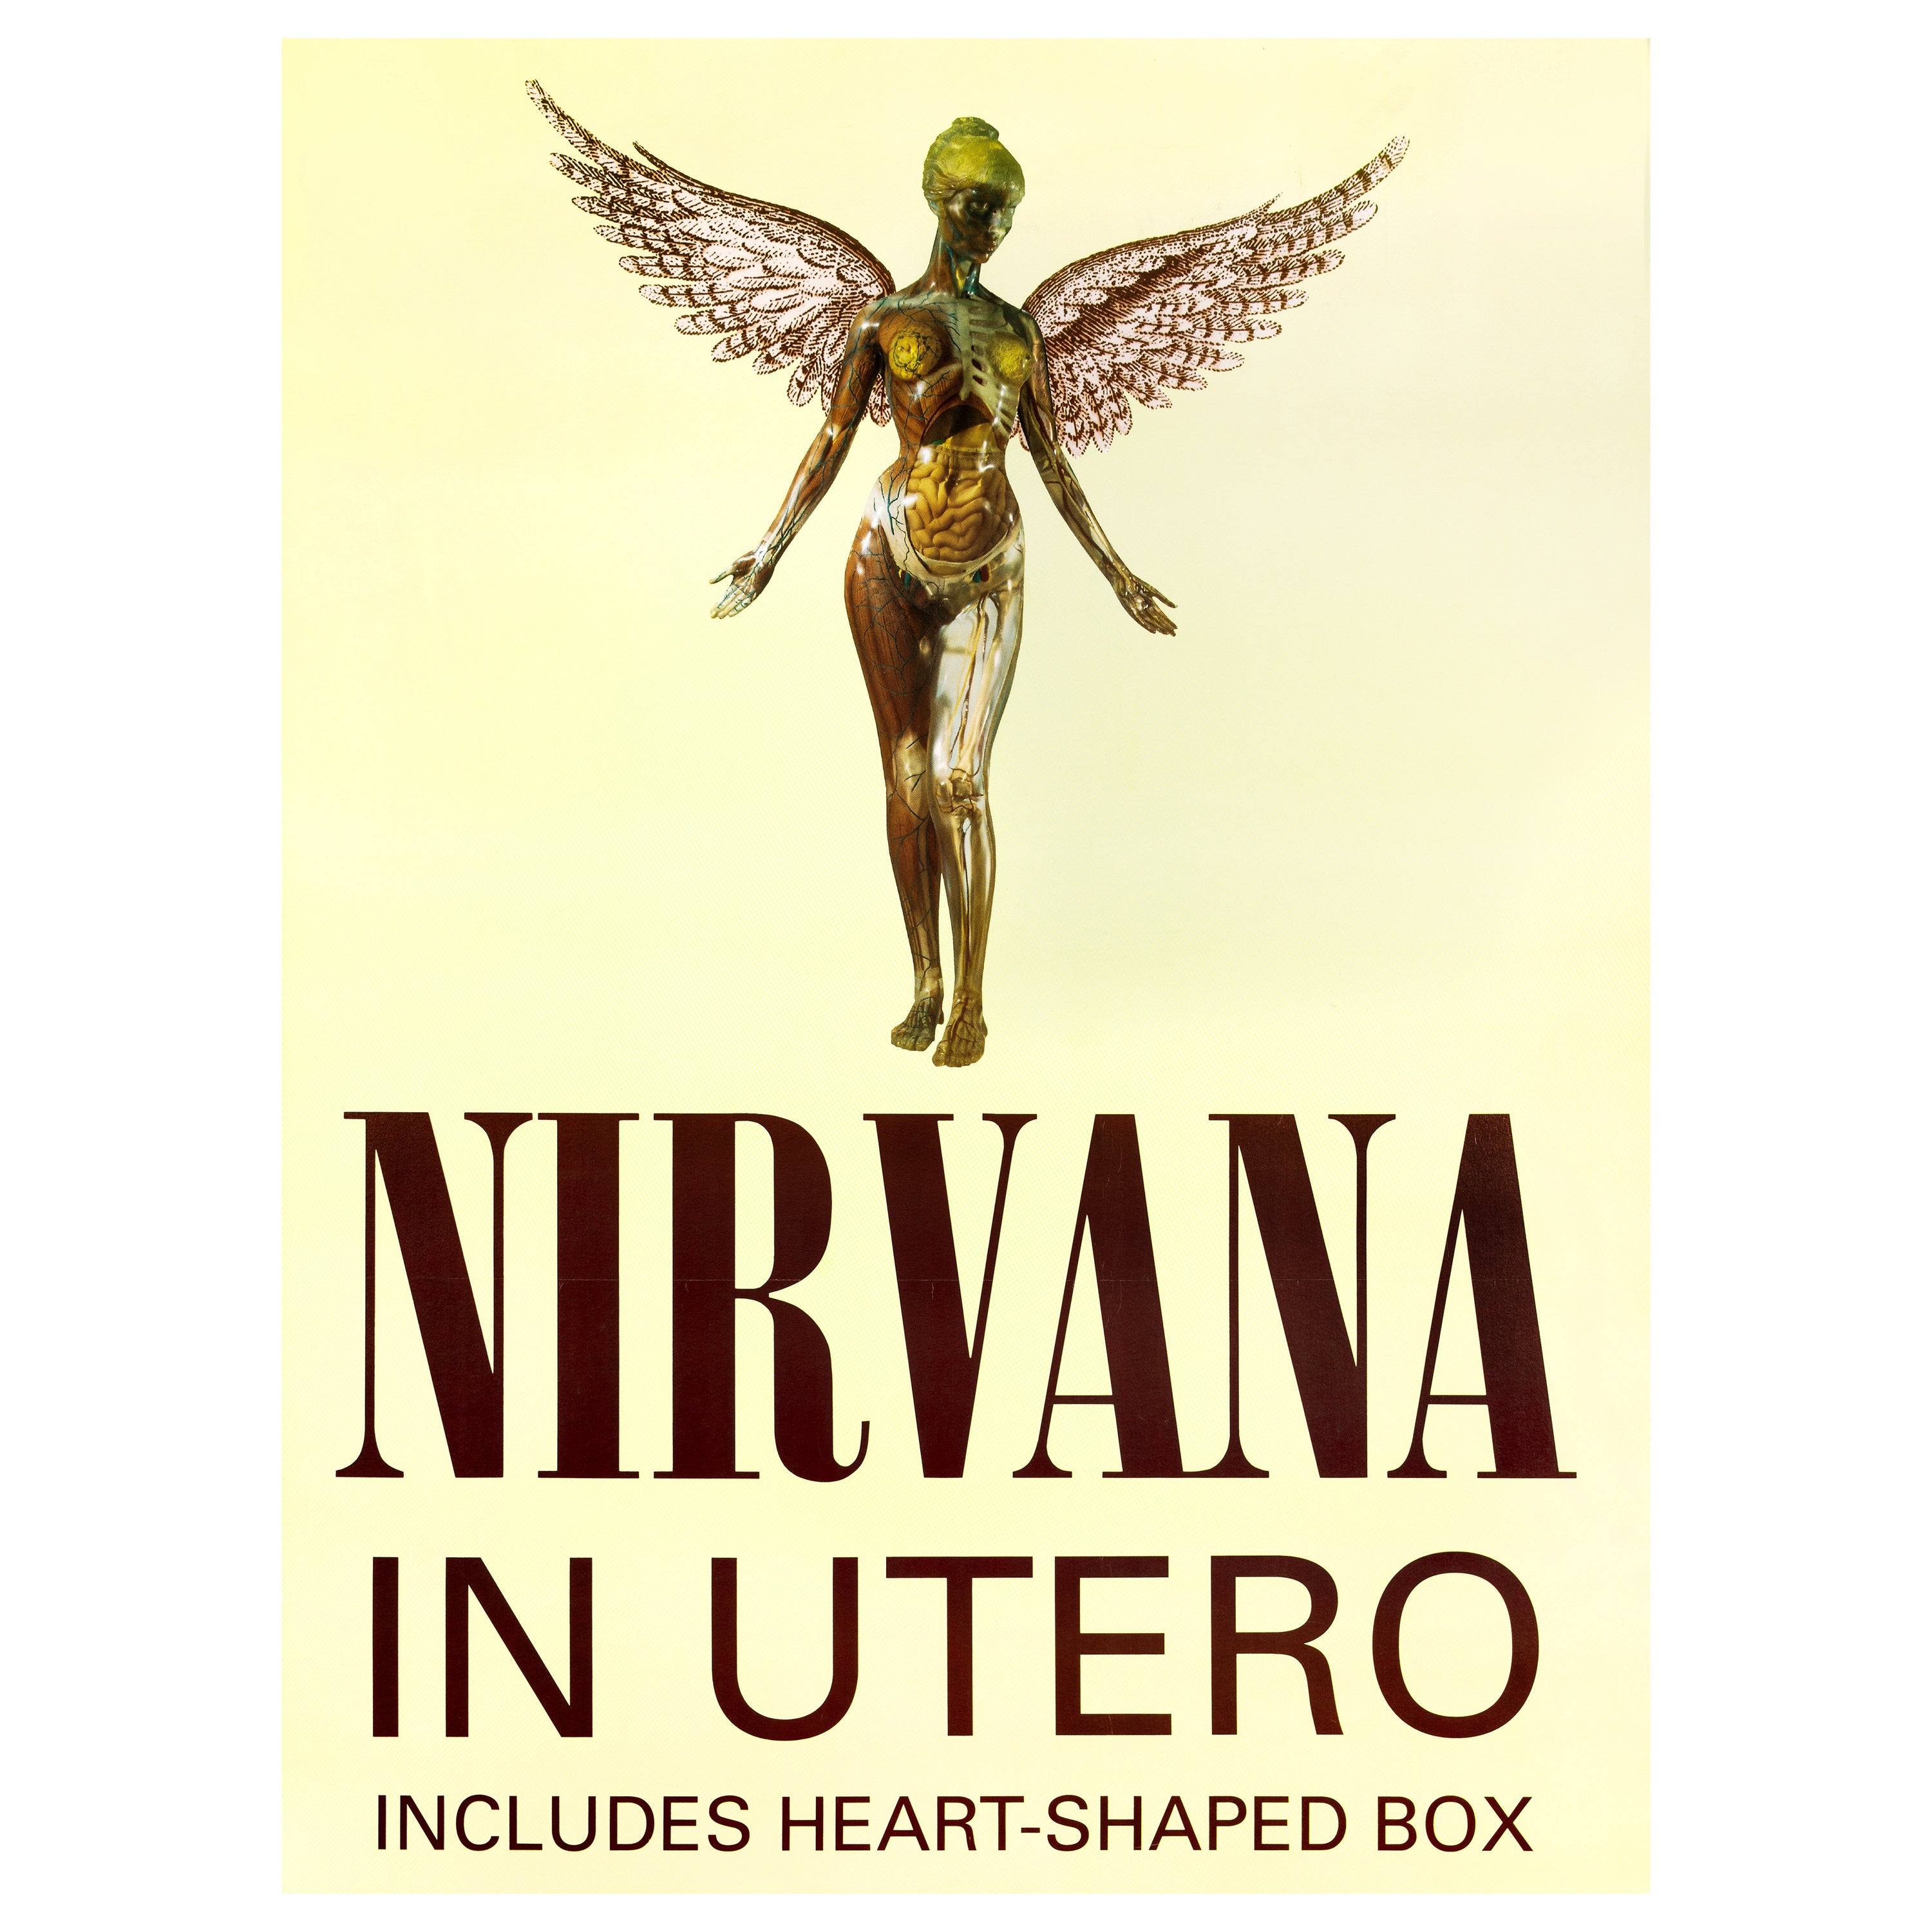 Nirvana 'In Utero' Original UK Bus Stop Promotional Poster, 1993